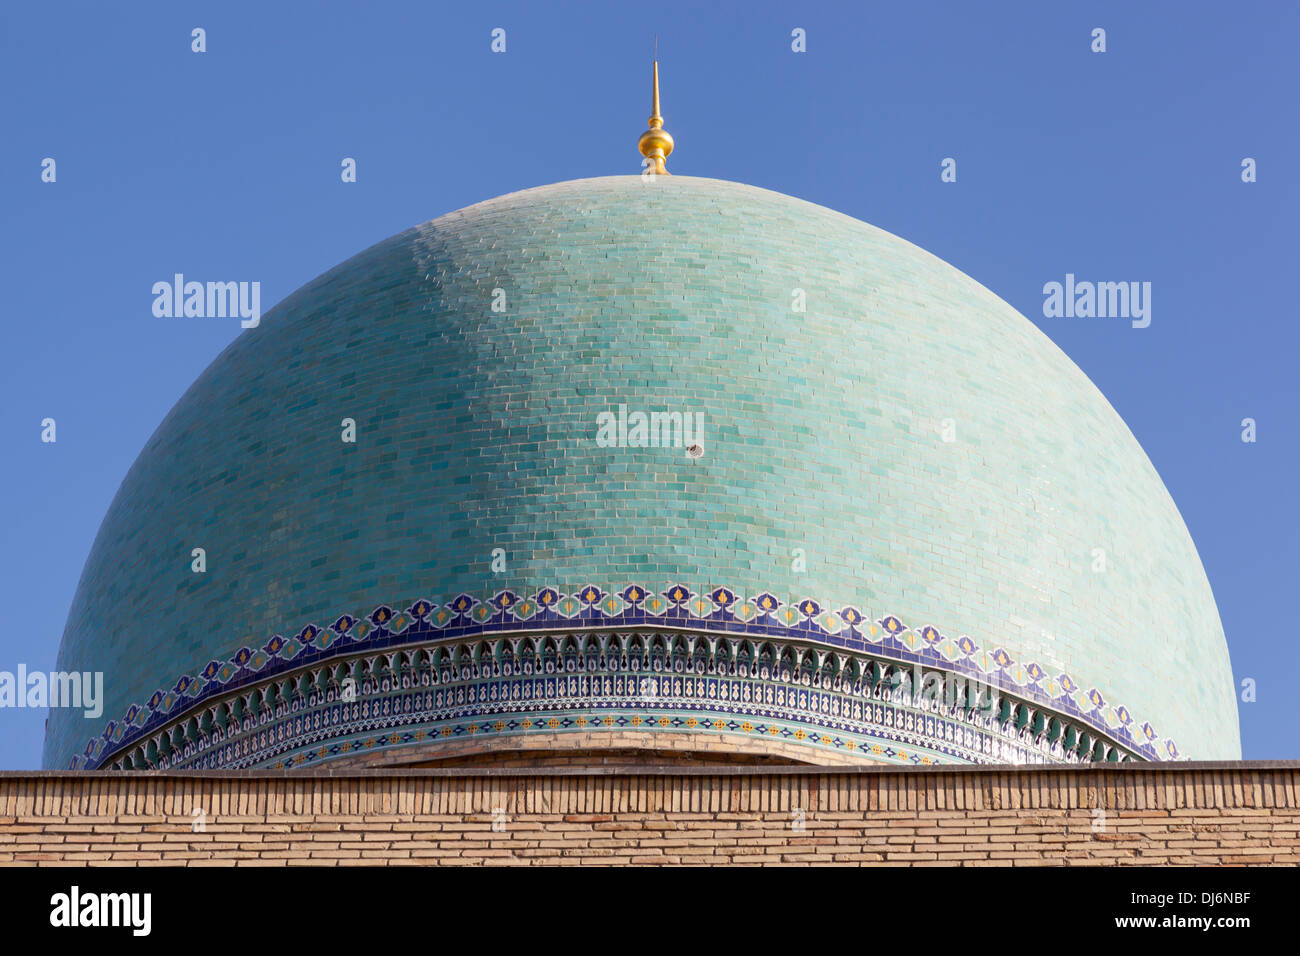 Eine Kuppel auf Hekime Imom Moschee, Hekime Imom komplexe, Hekime Imom Square, Taschkent, Usbekistan Stockfoto